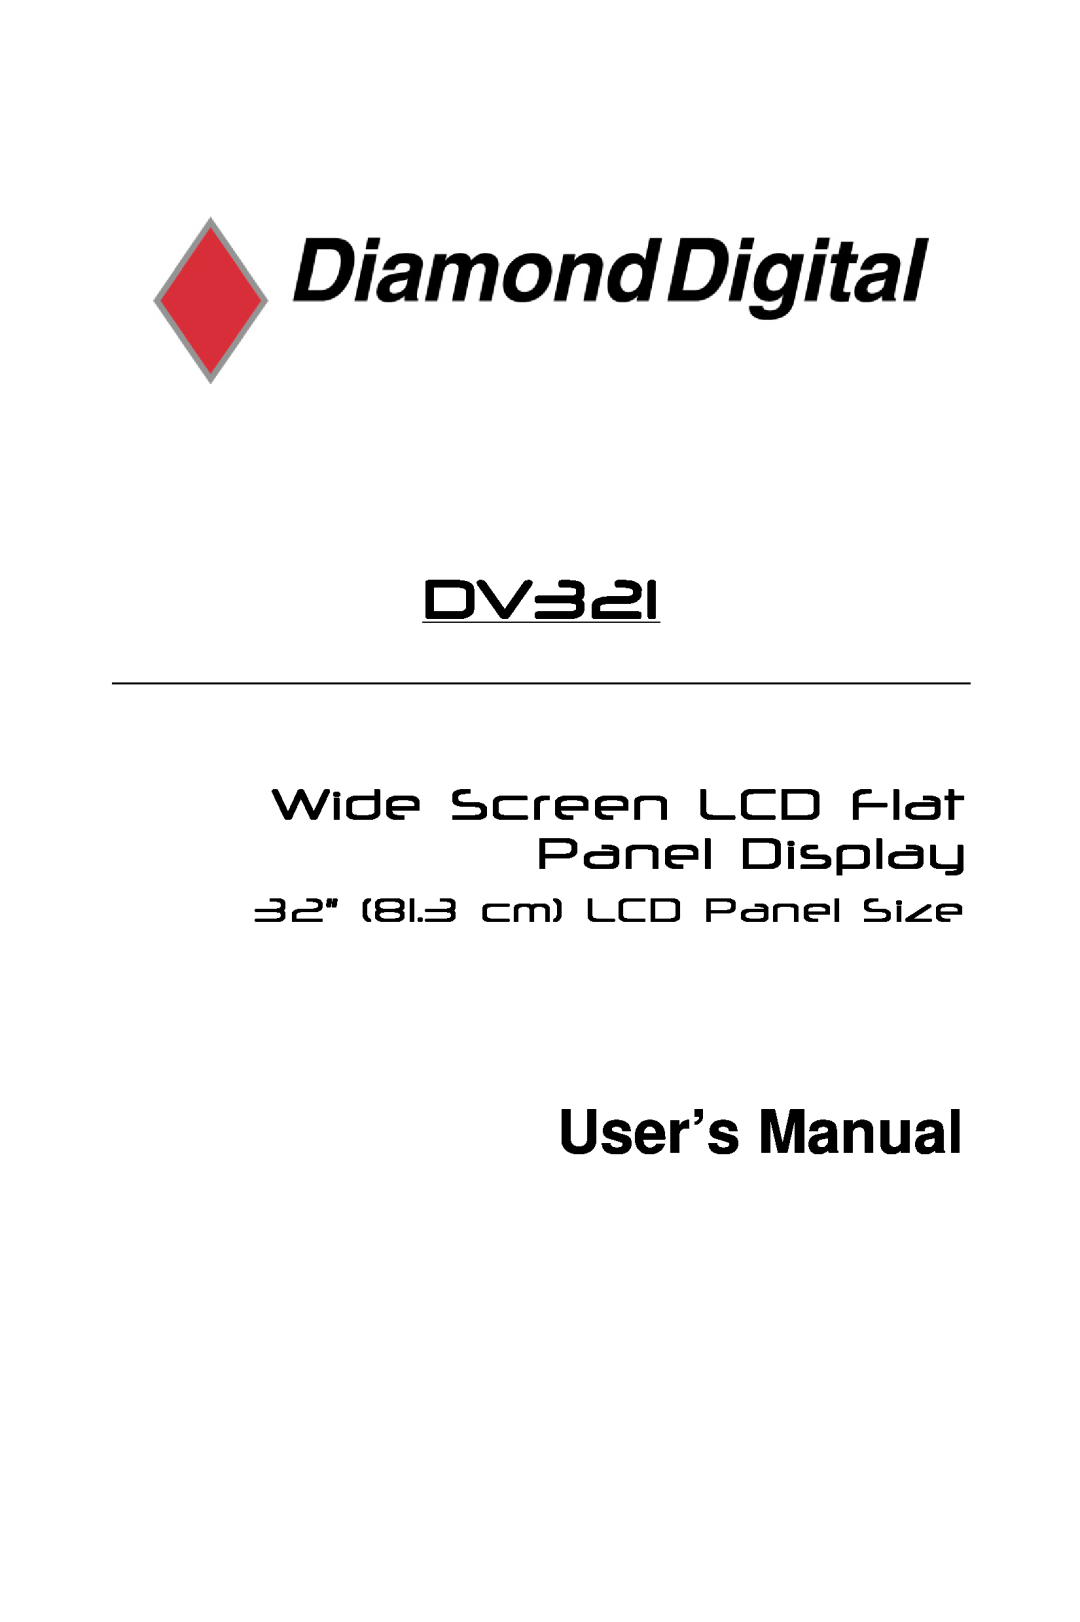 Mitsubishi Electronics DV321 user manual User’s Manual, Wide Screen LCD Flat Panel Display, 32” 81.3 cm LCD Panel Size 